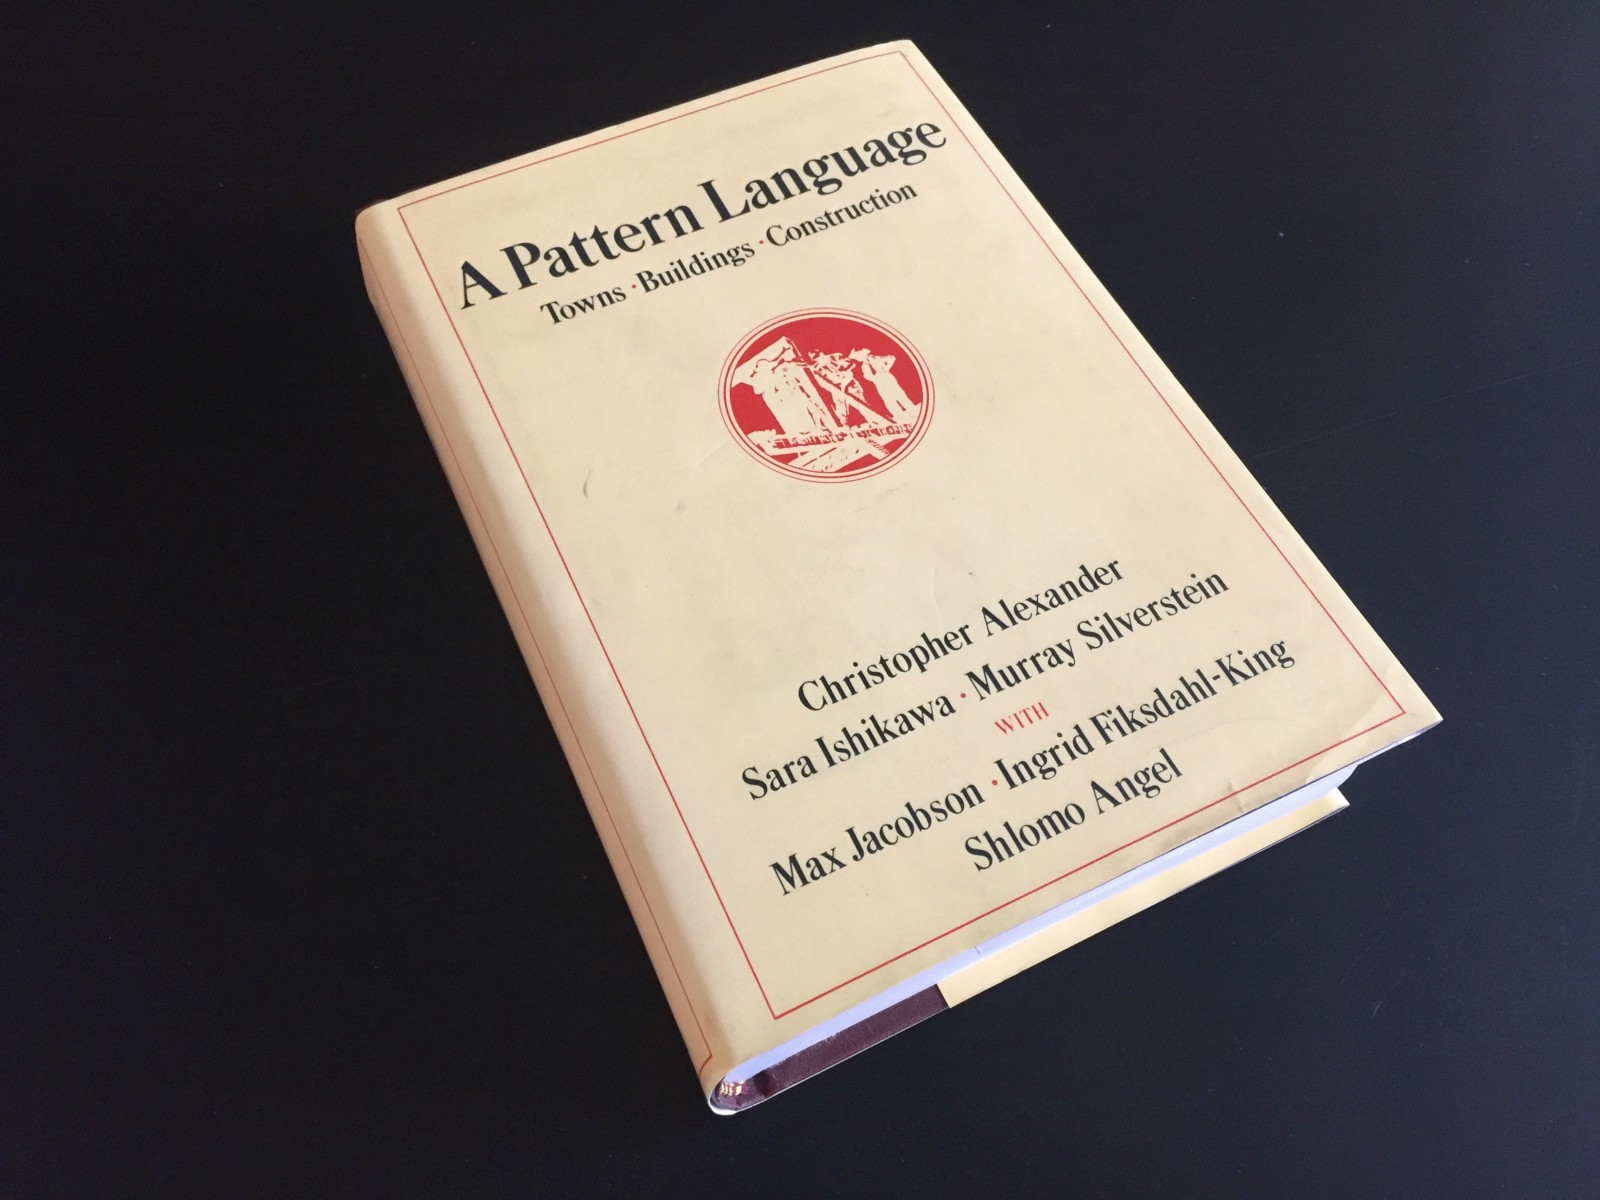 Photograph of A Pattern Language book